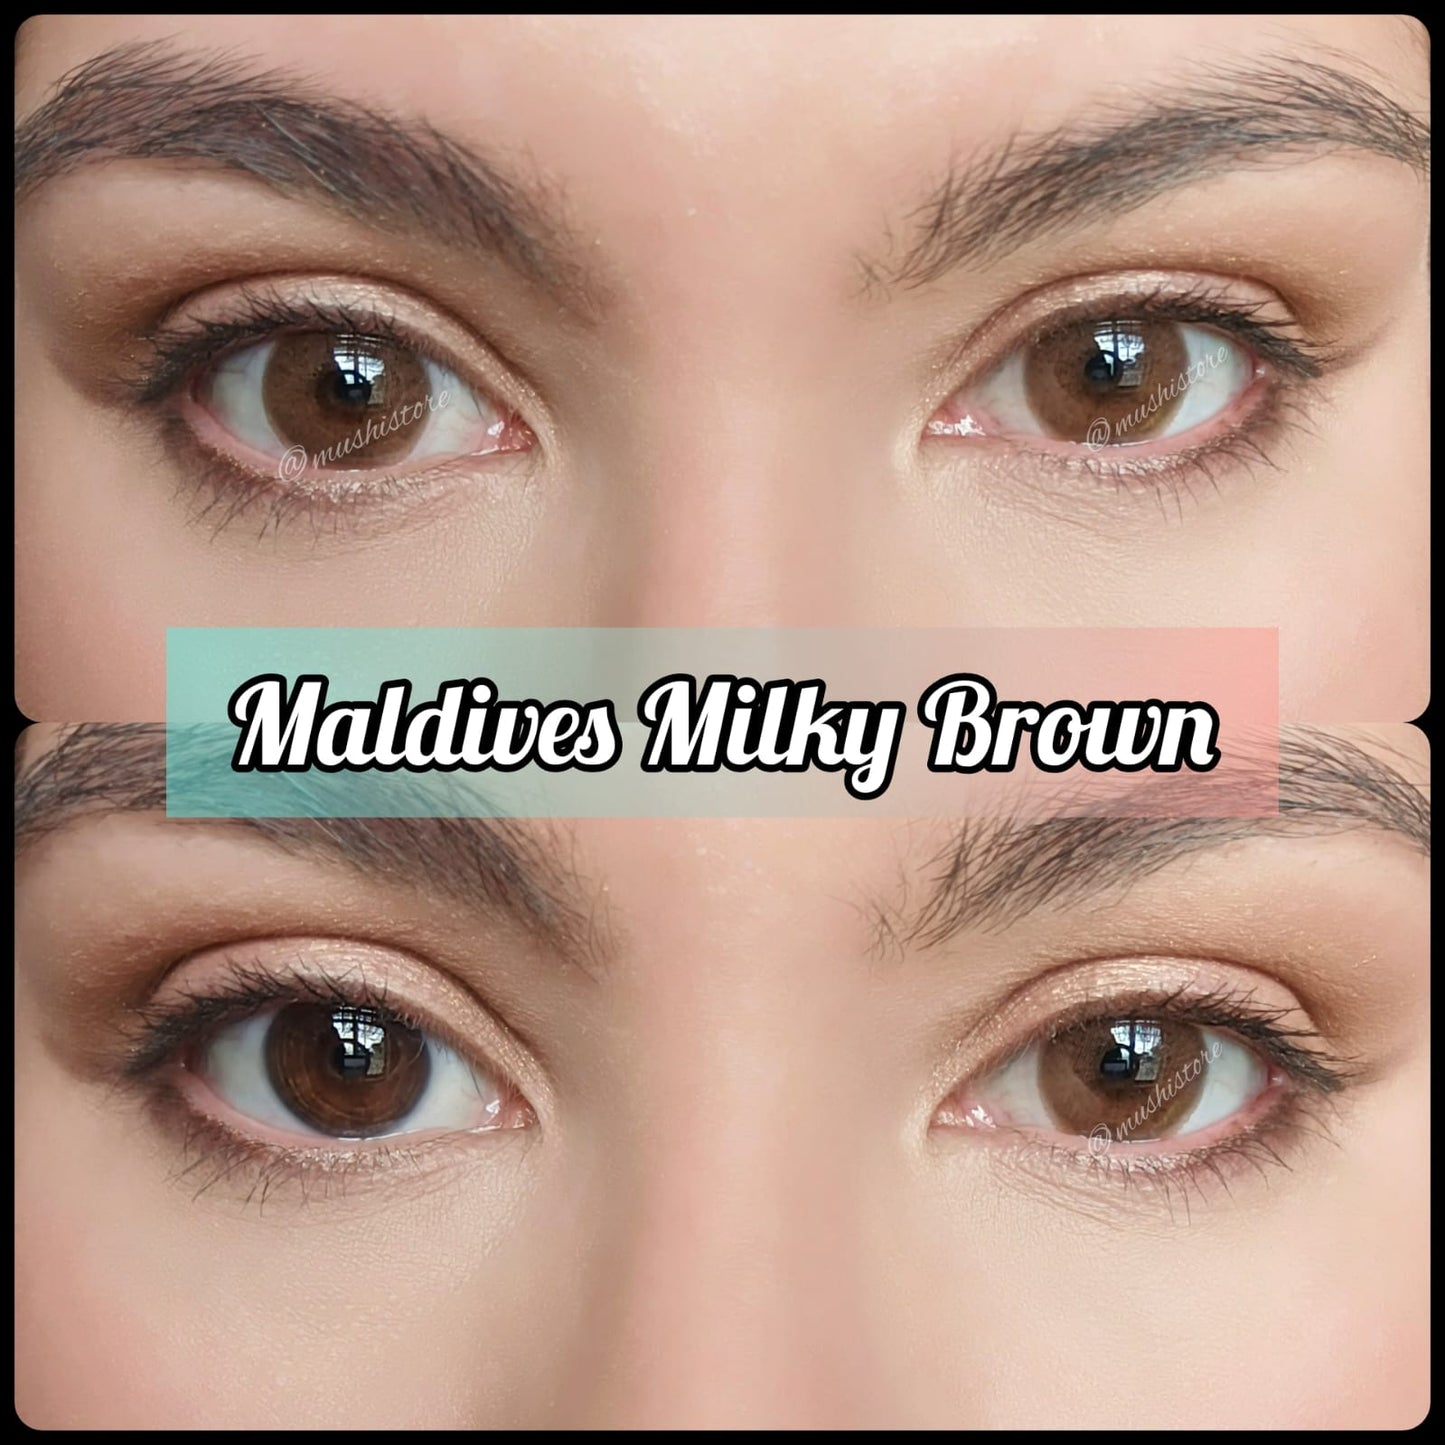 Maldives Milky Brown